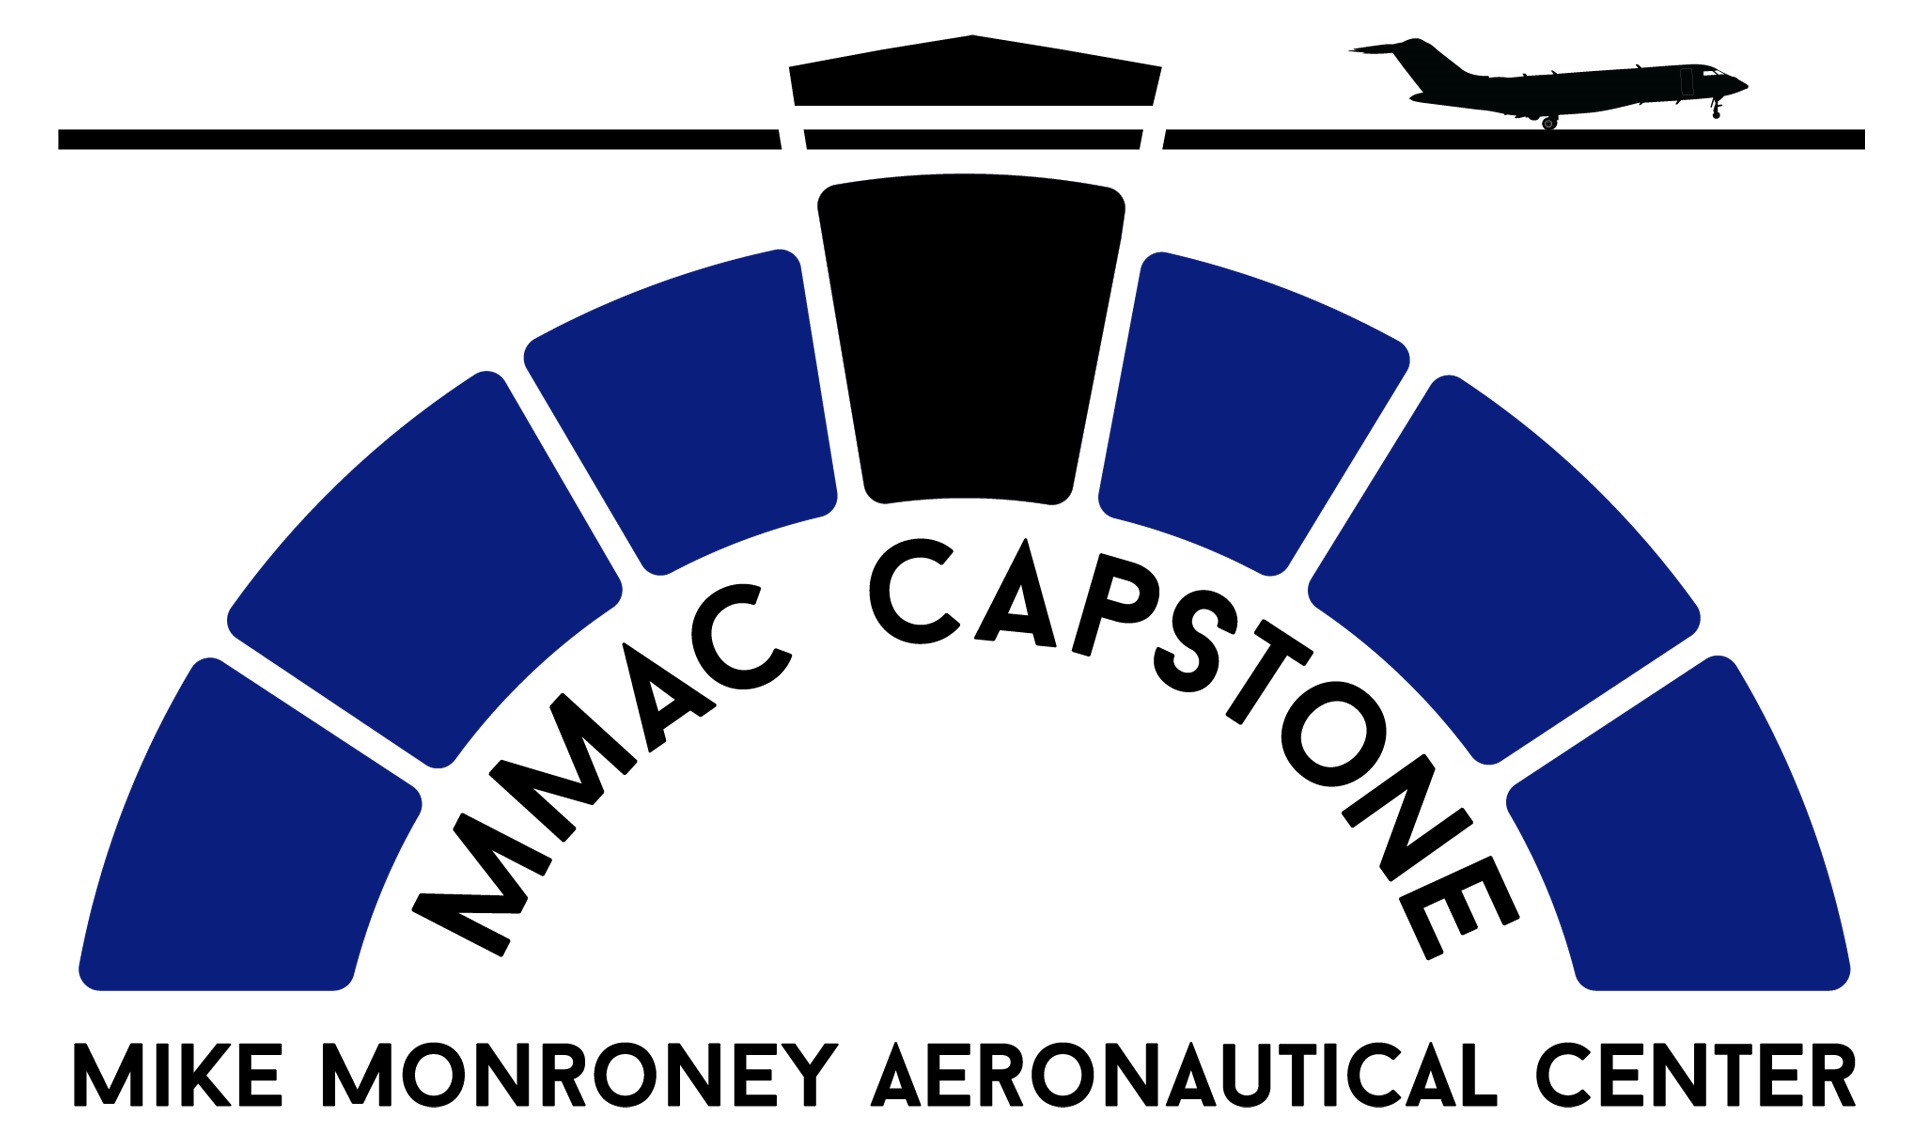 MMAC Capstone logo